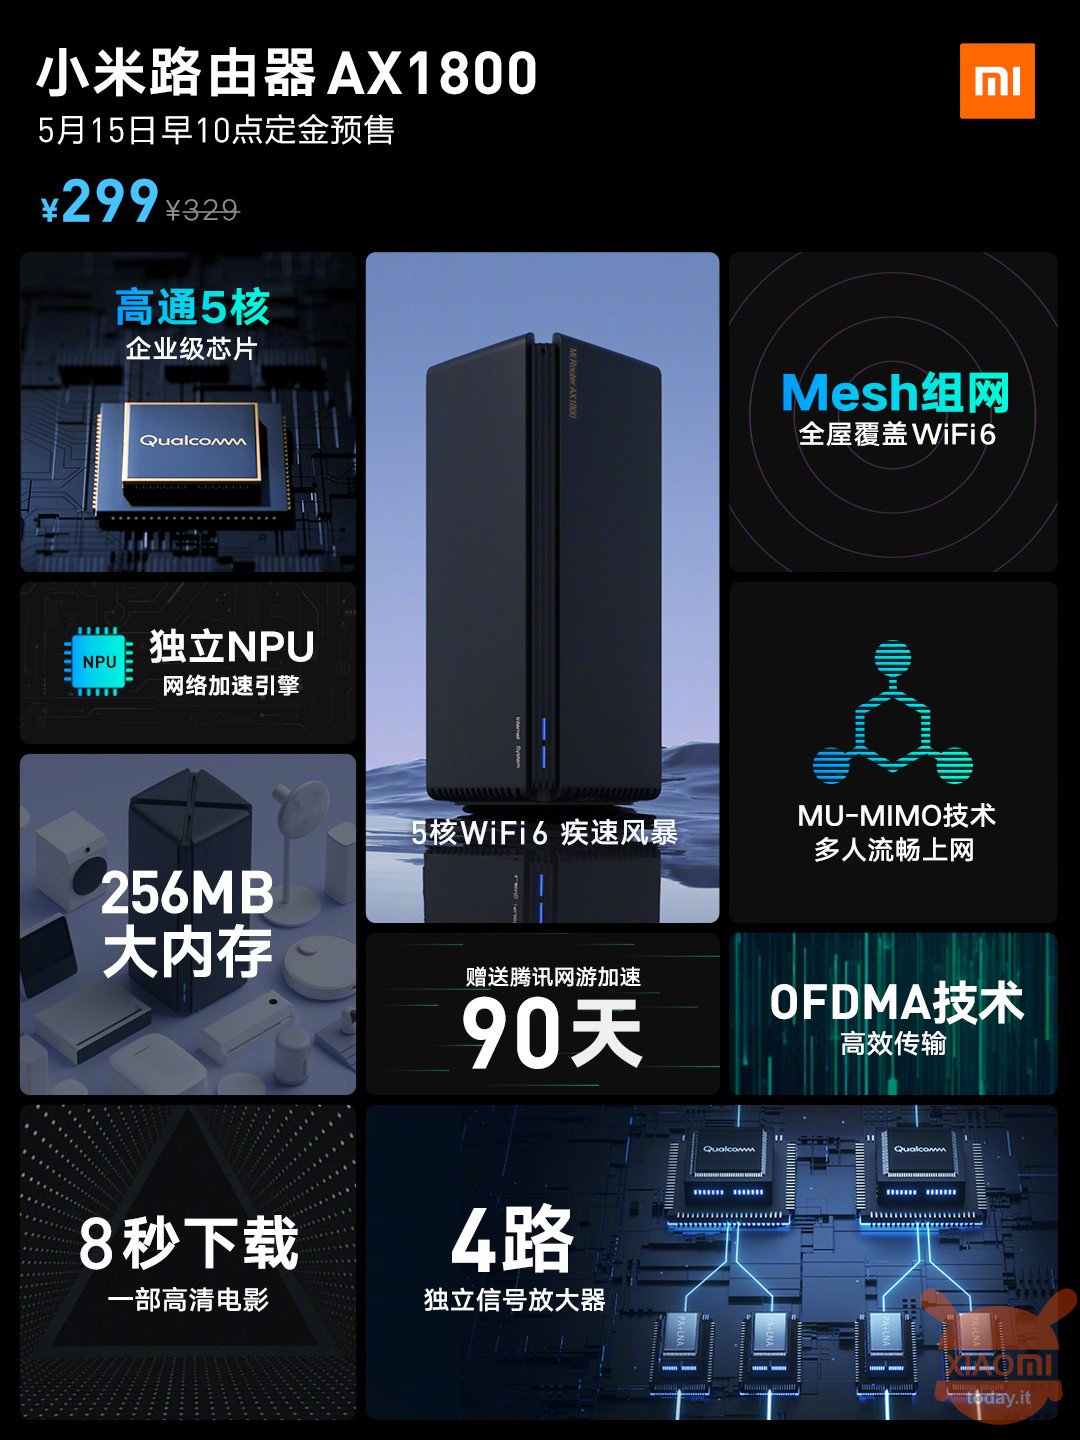 Xiaomi AX1800 WiFi 6